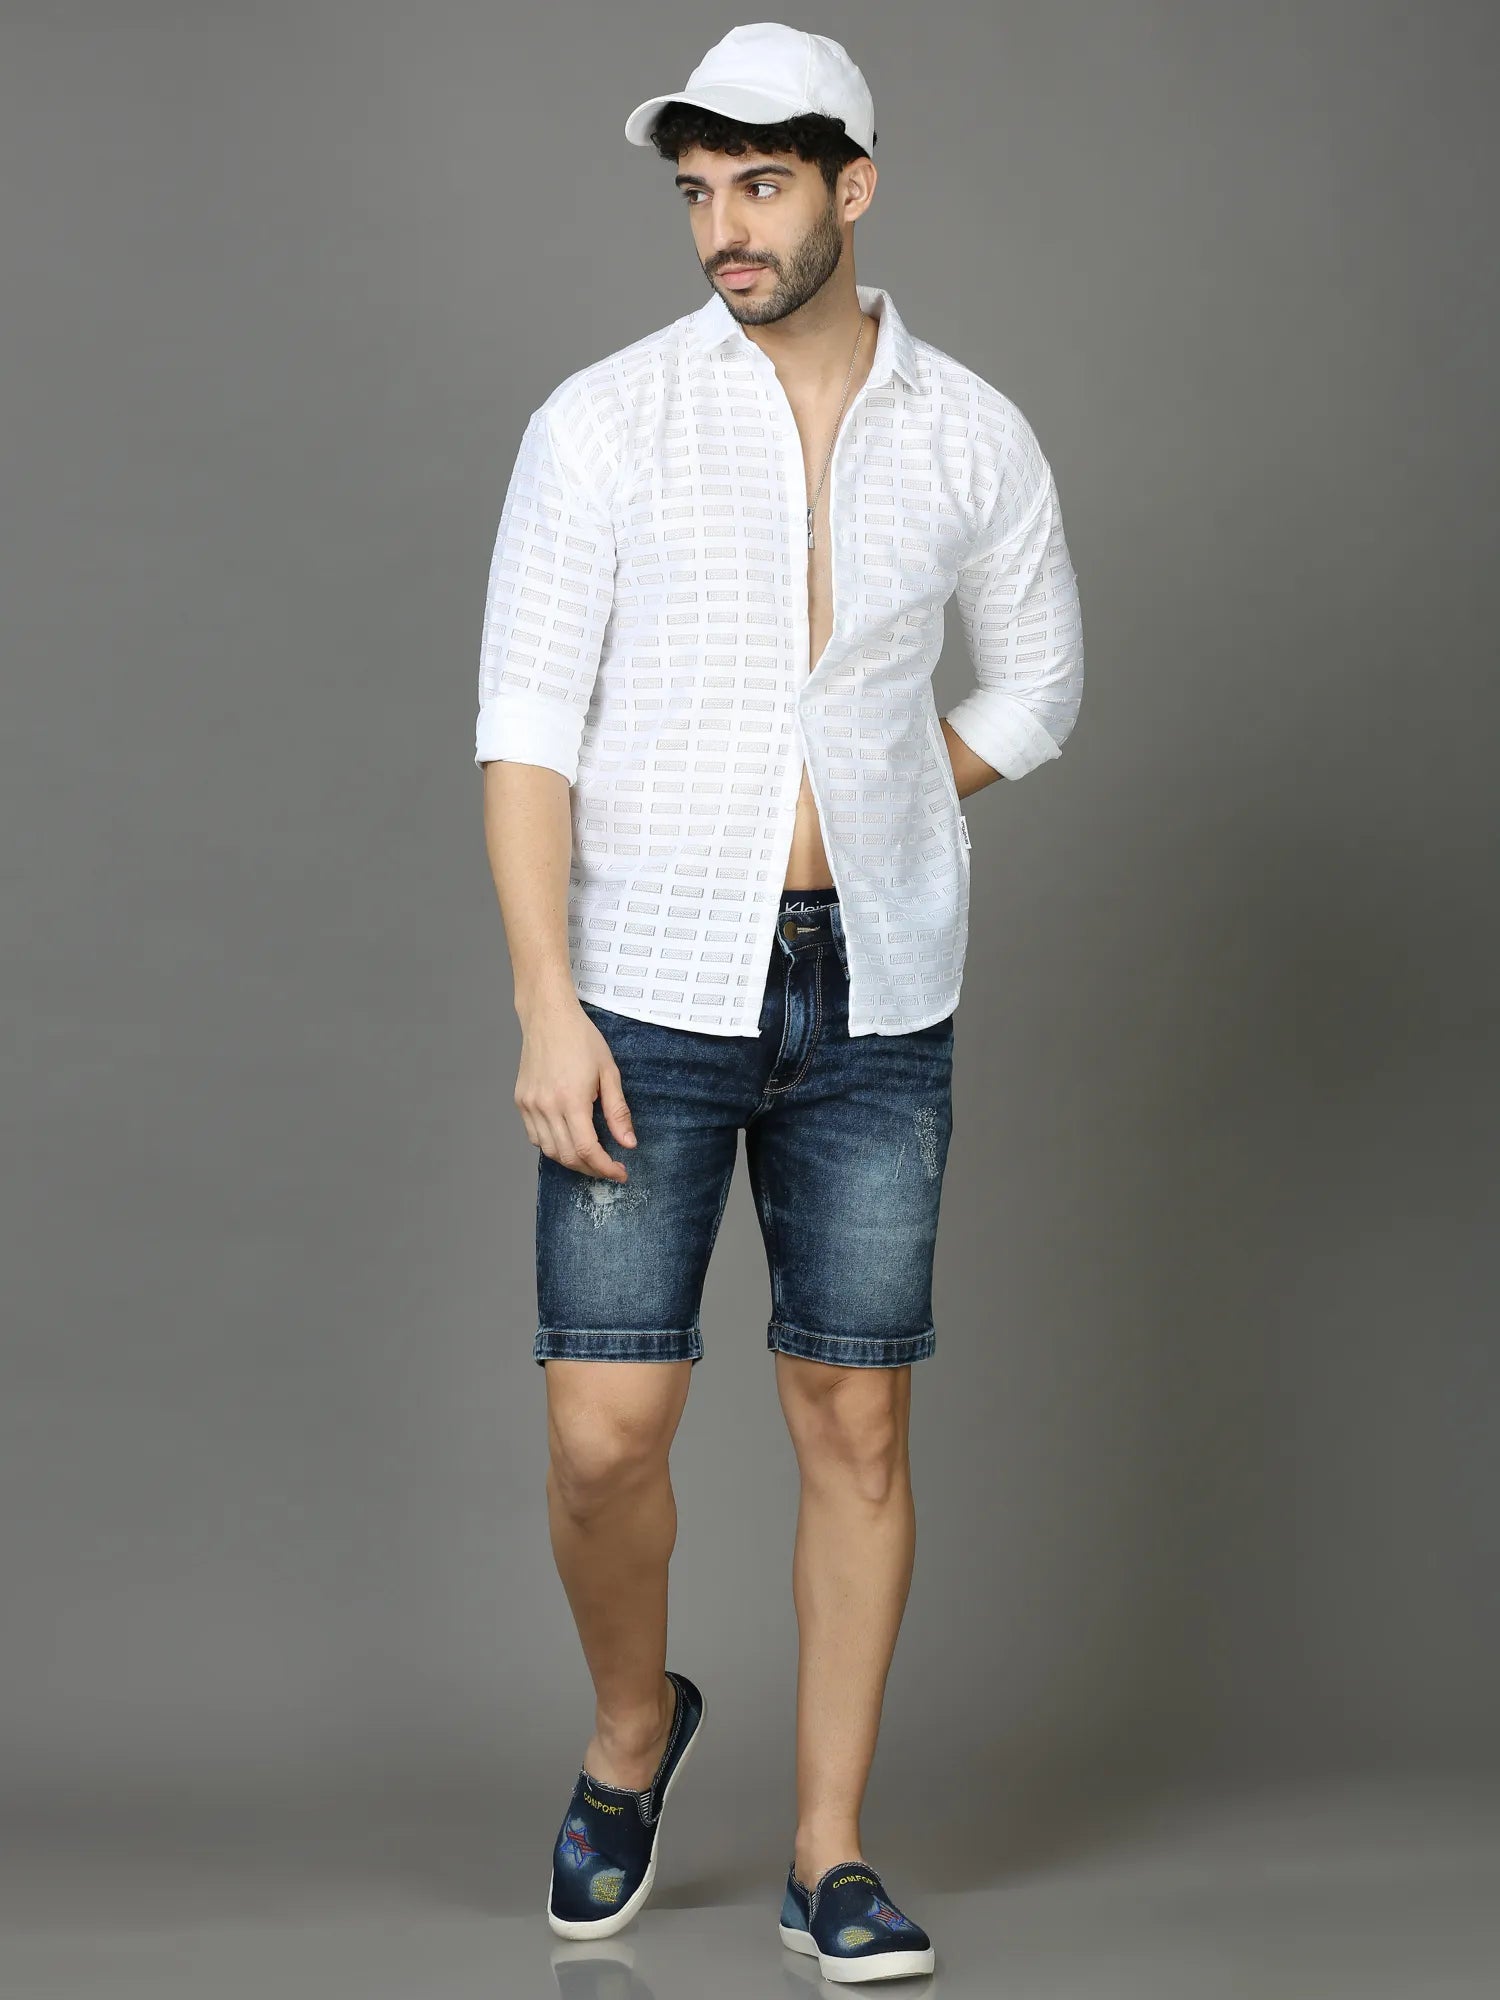 Sophisticated White Down Shoulder Shirt for Men 